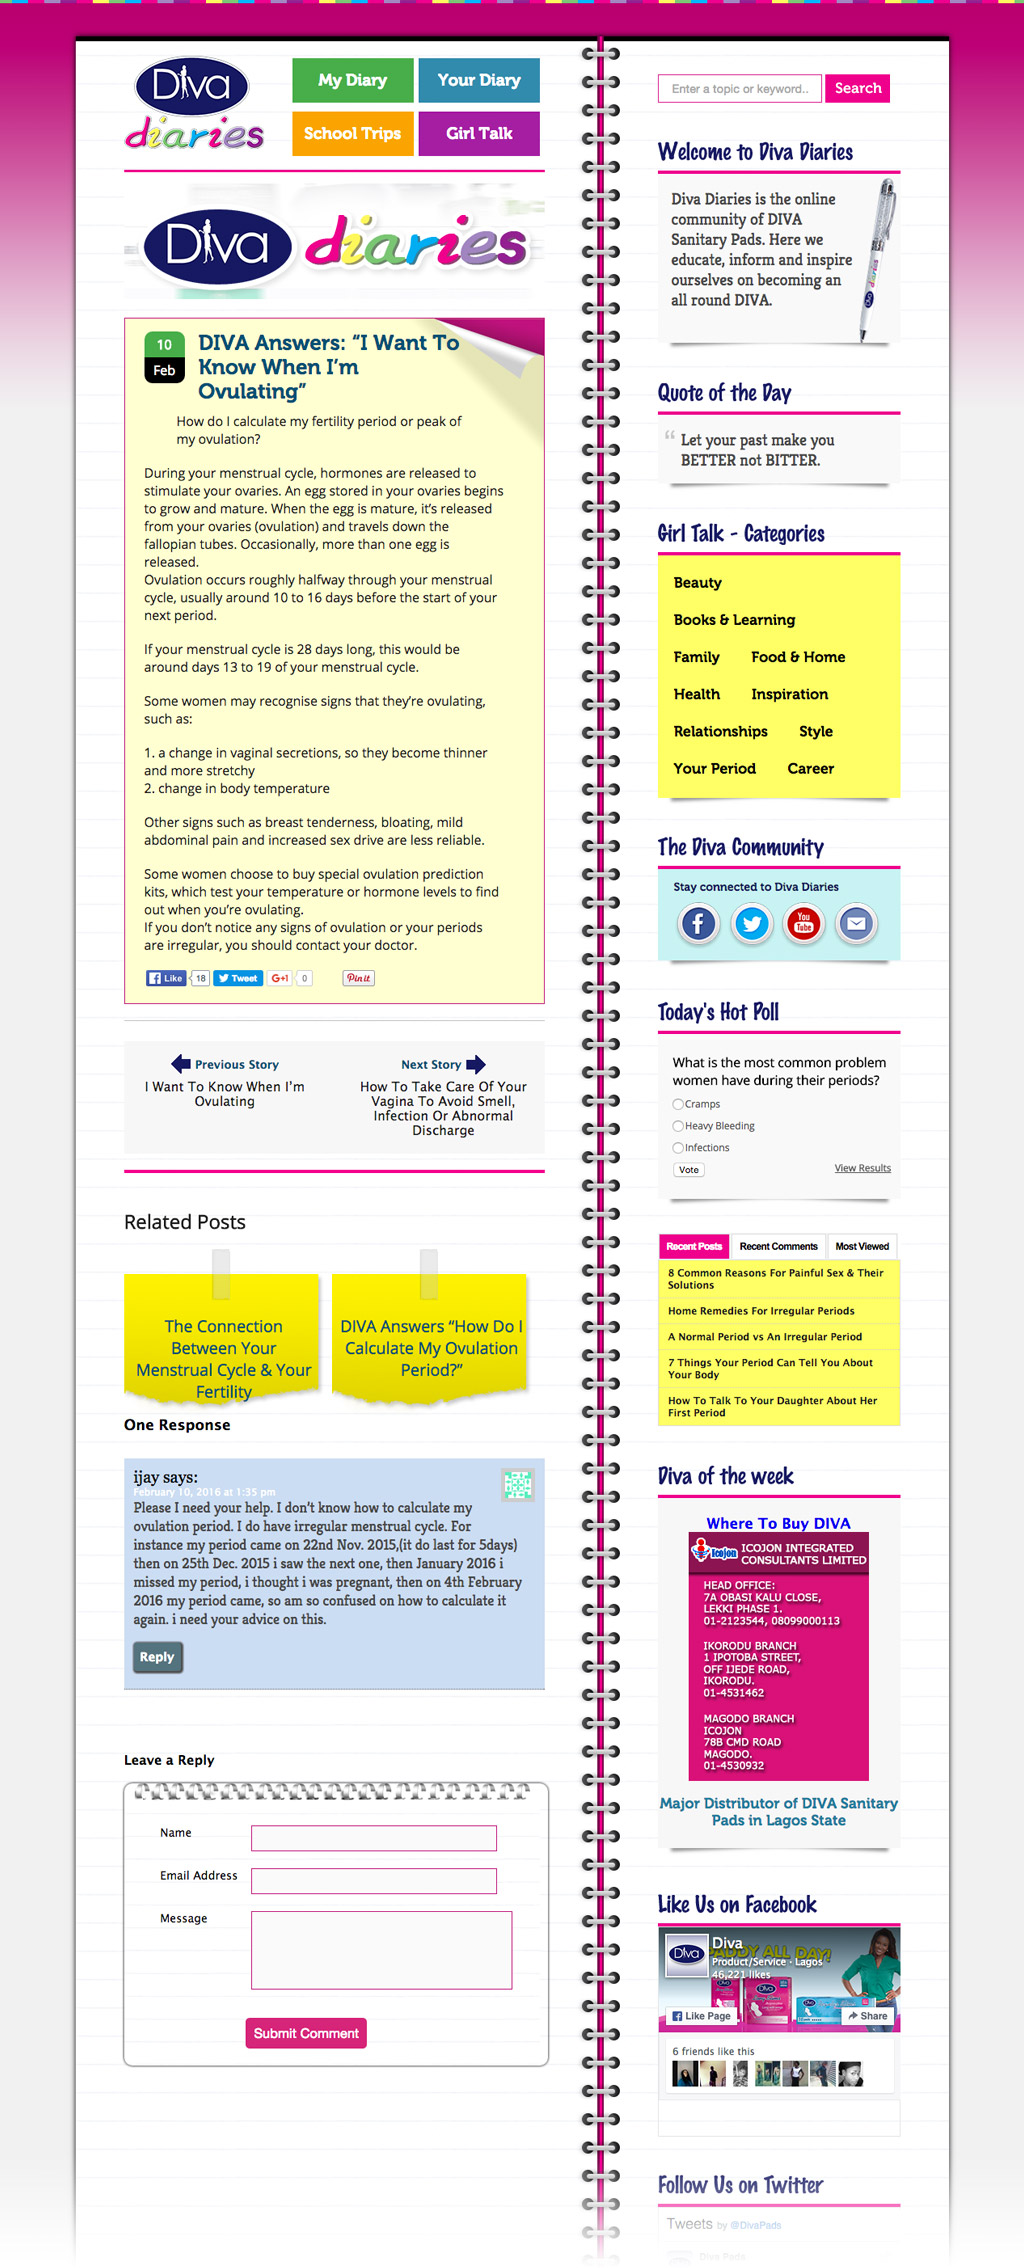 diva-diaries-blog-homepage-design